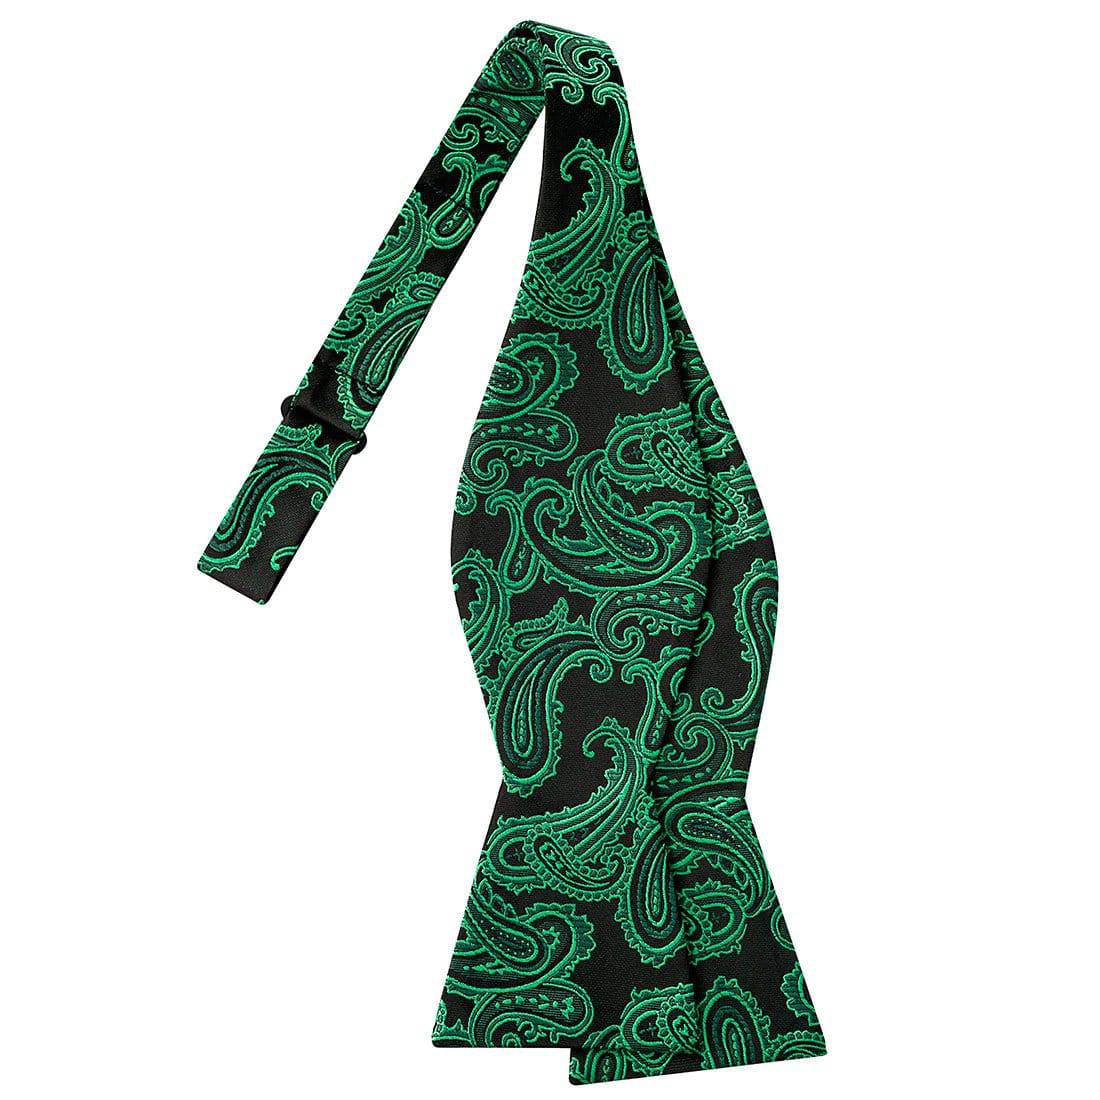 Seafoam Green on Black Paisley Bowtie - Tie, bowtie, pocket square  | Kissties